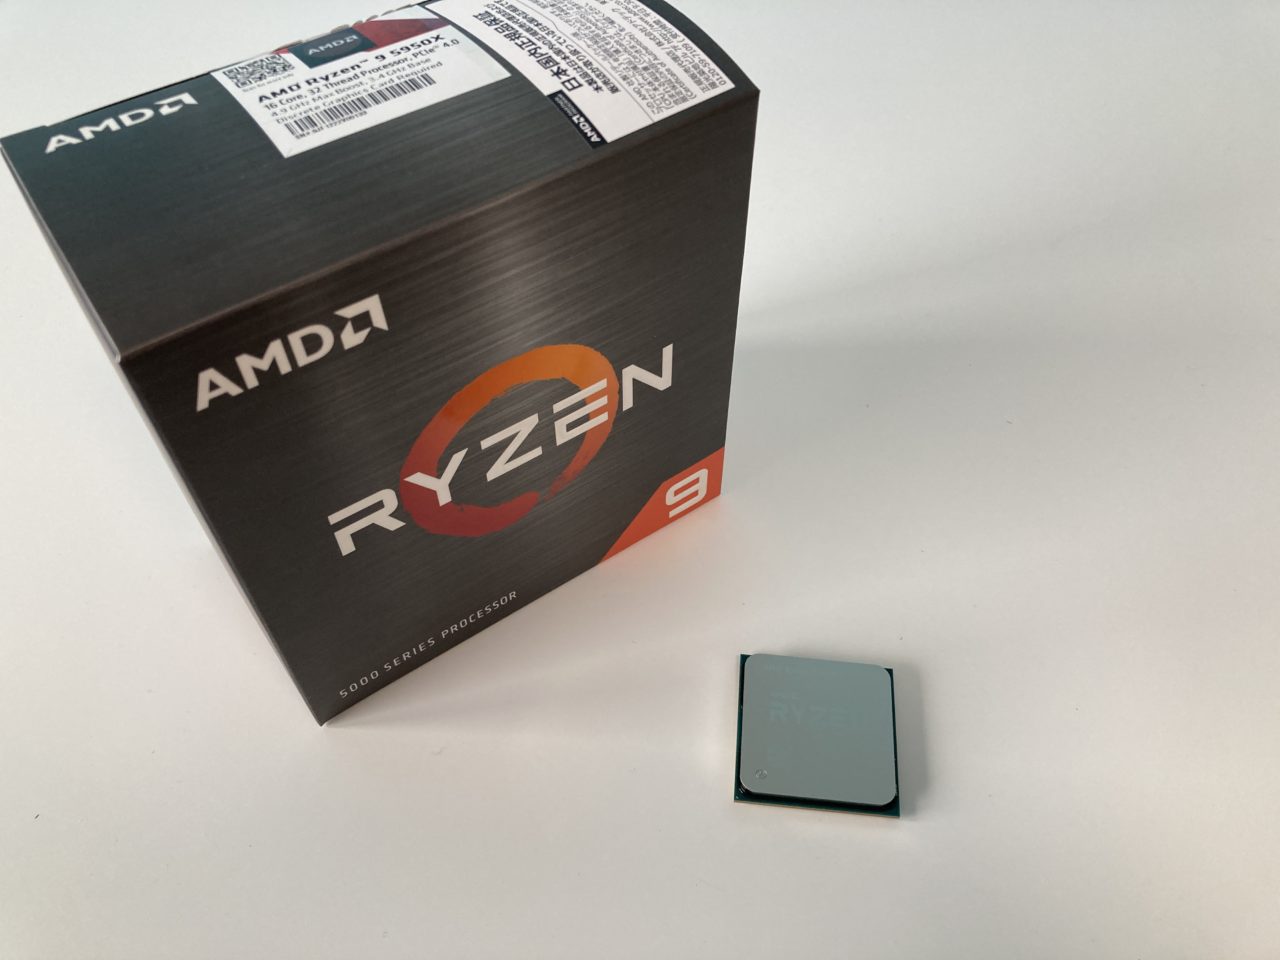 Zen3最強のCPU Ryzen 9 5950Xをレビュー 16コア32スレッドの実力は 